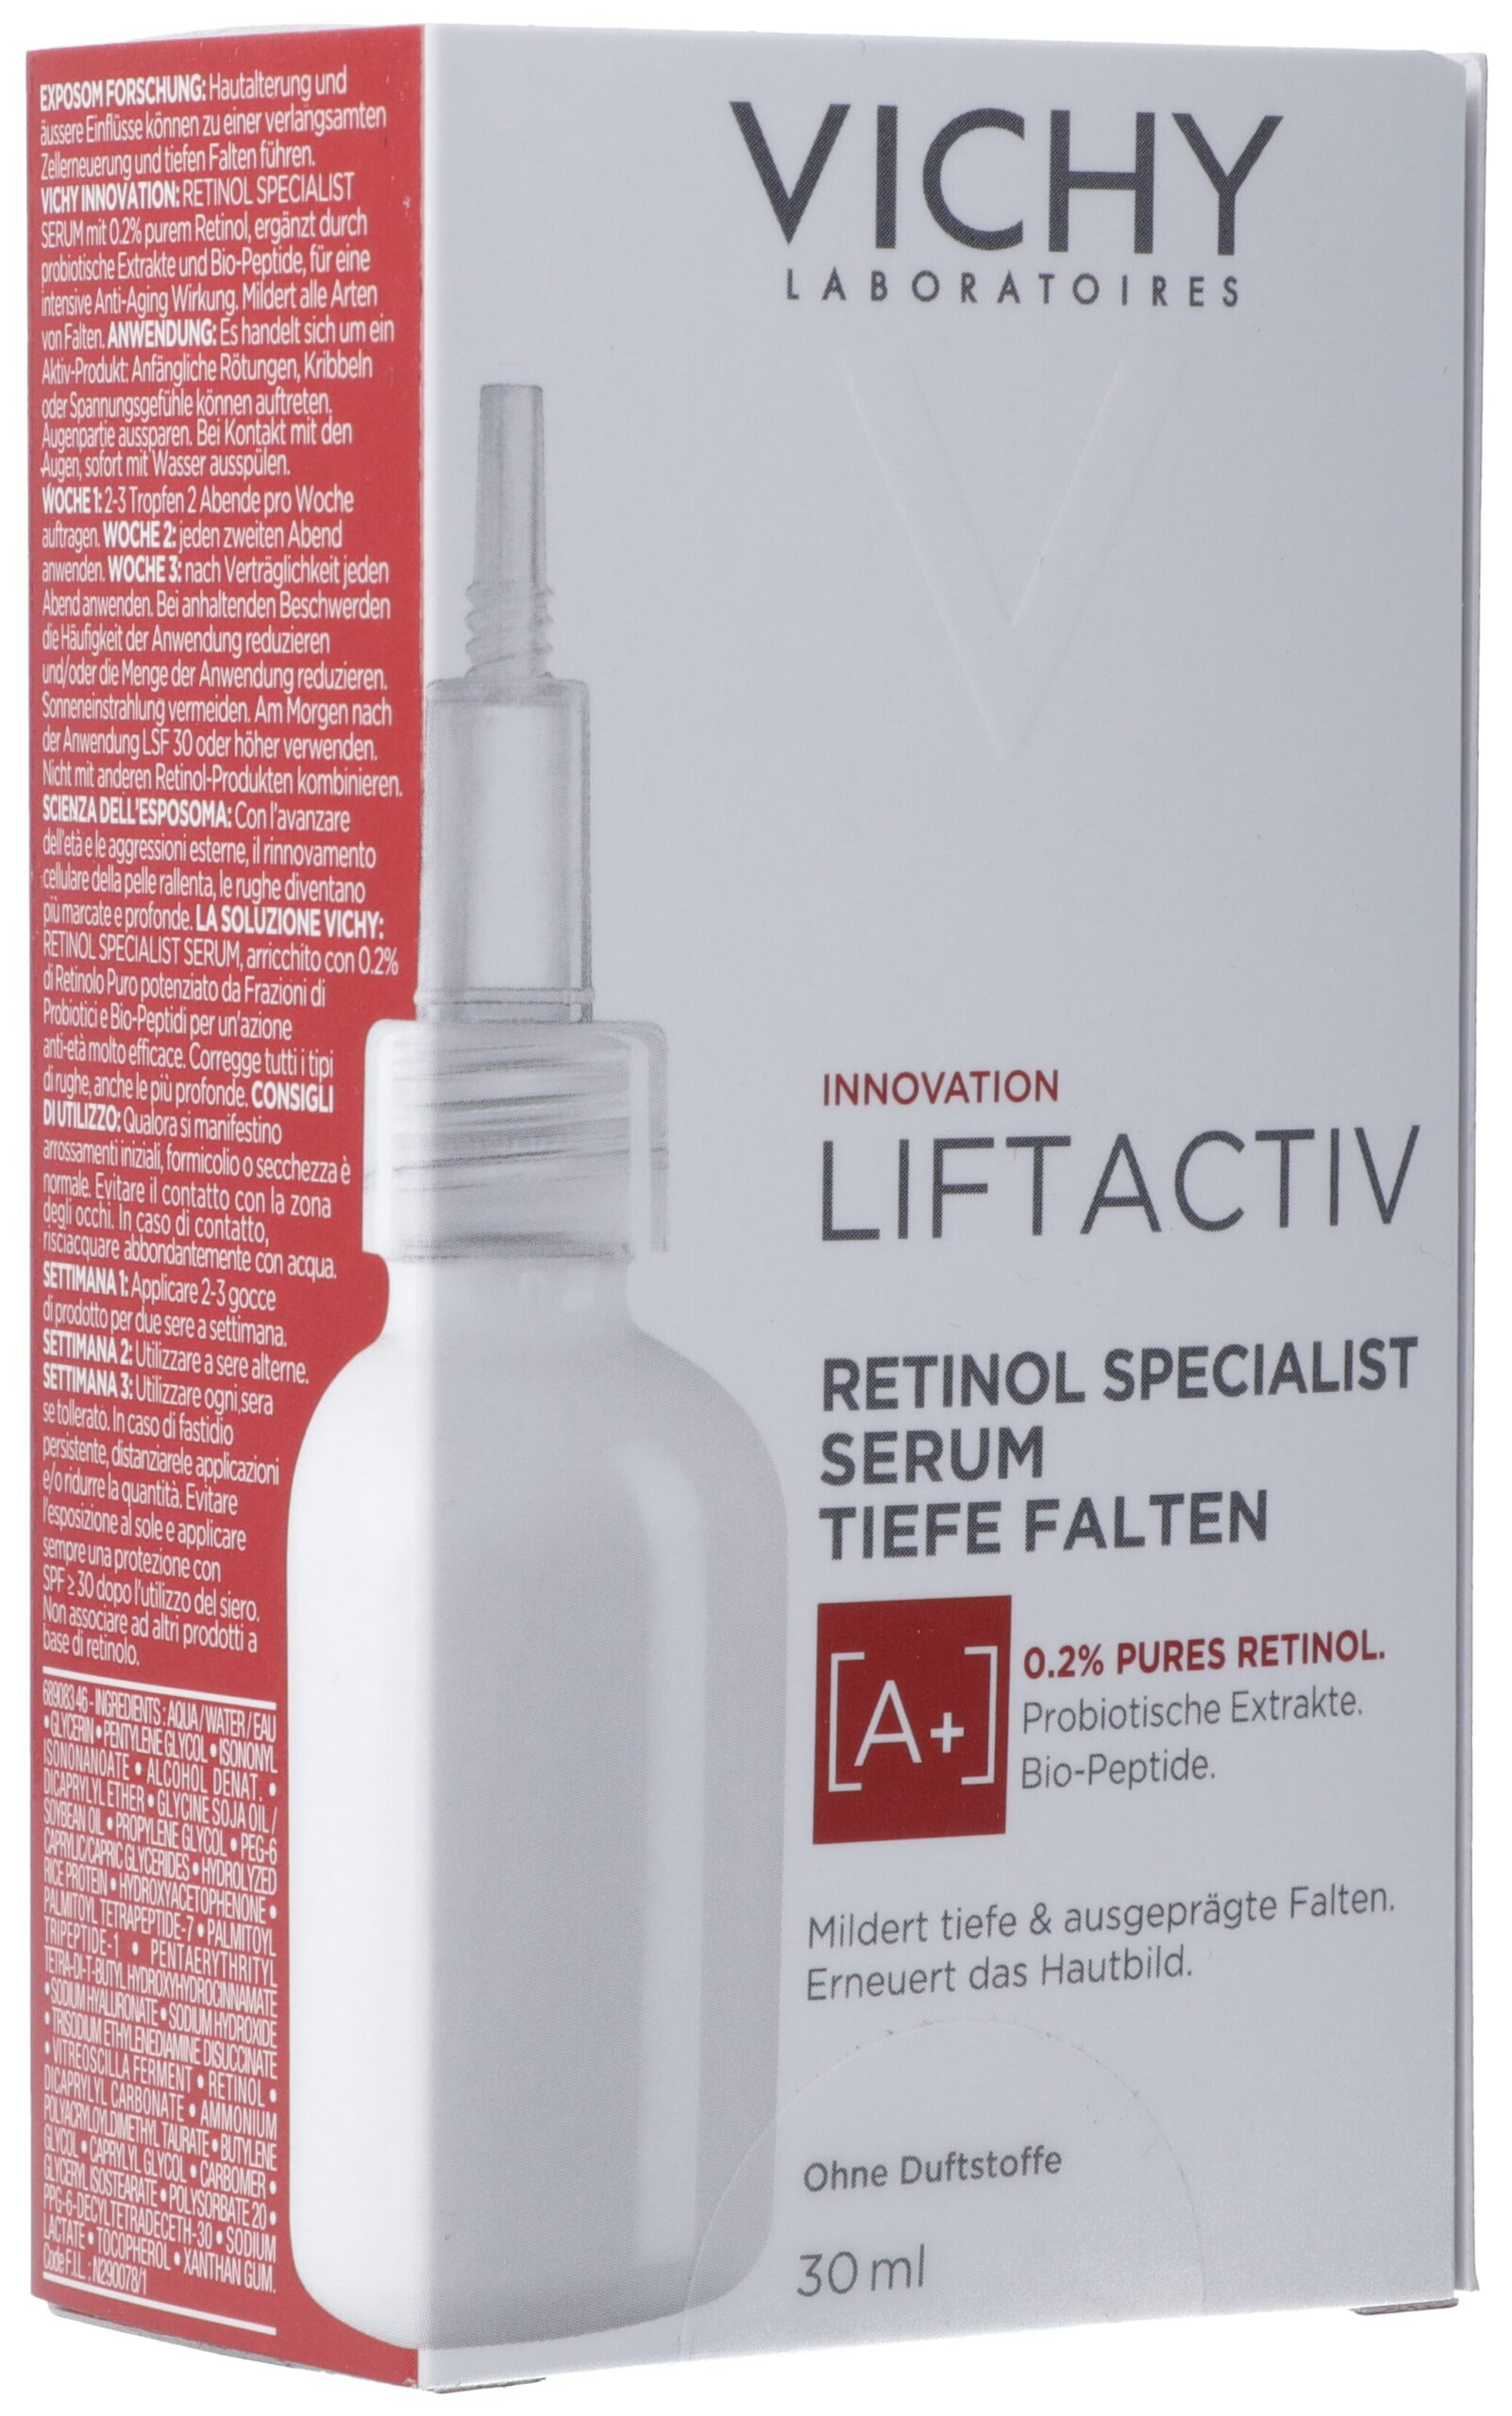 VICHY Liftactiv Retinol Special Serum Fl 30 ml